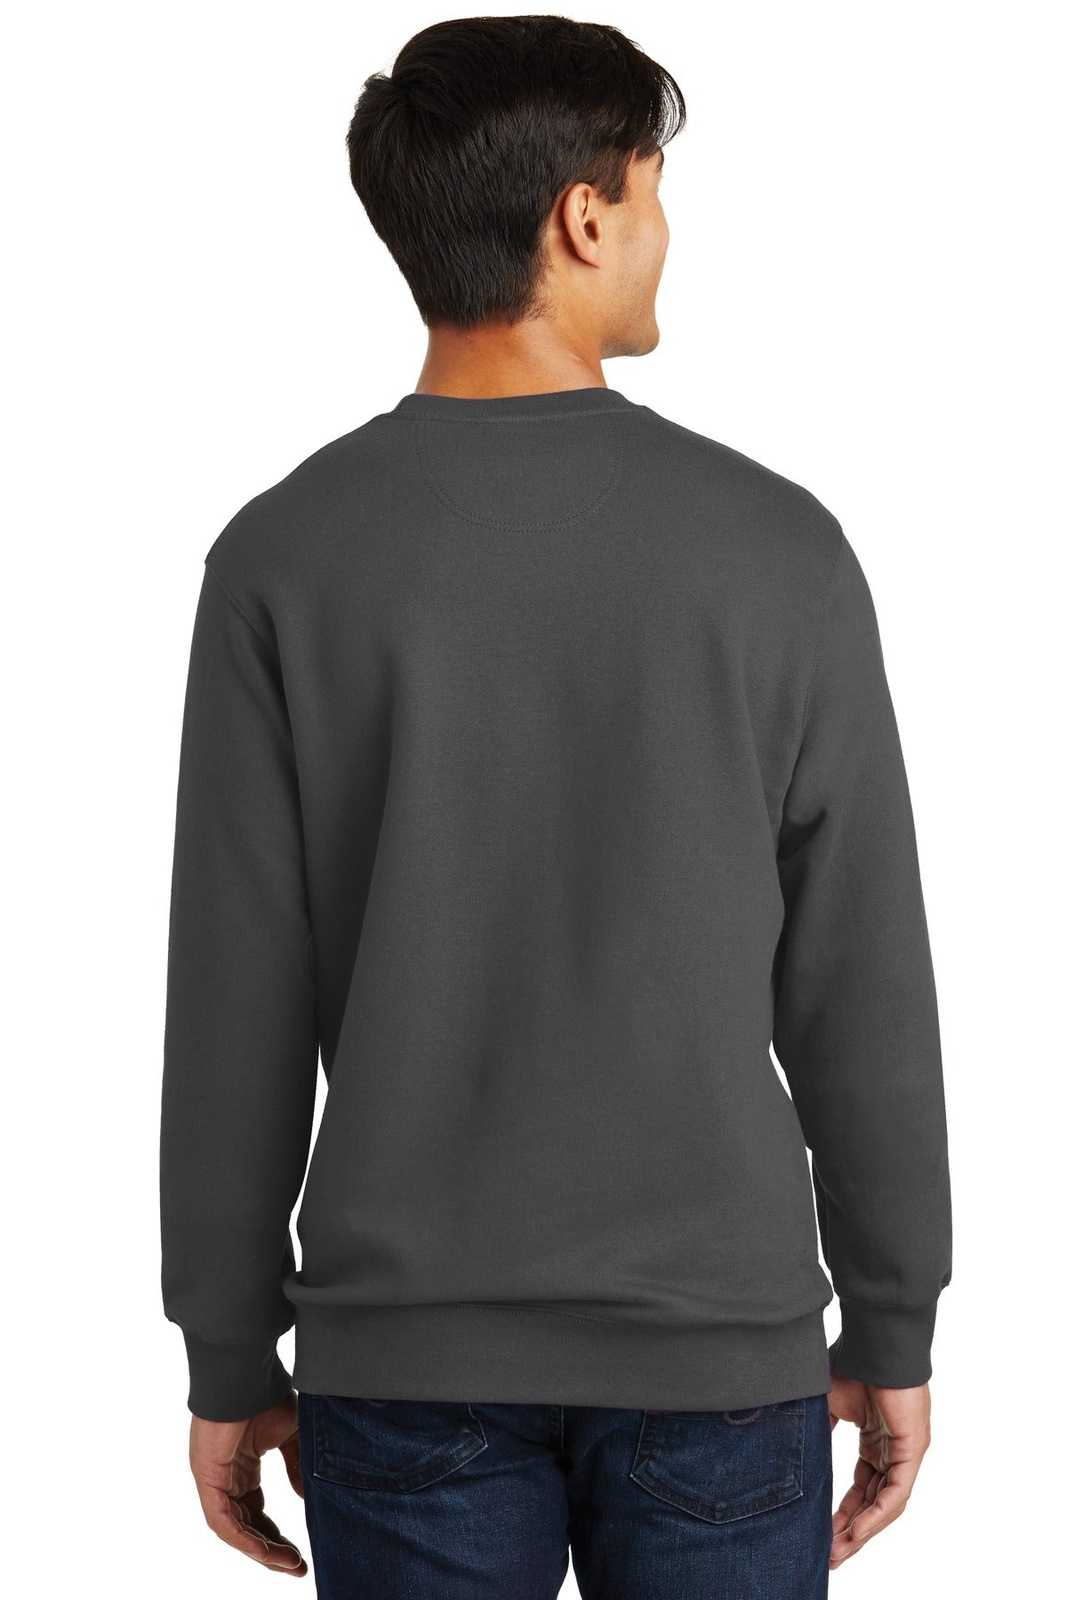 Port & Company PC850 Fan Favorite Fleece Crewneck Sweatshirt - Charcoal - HIT a Double - 1